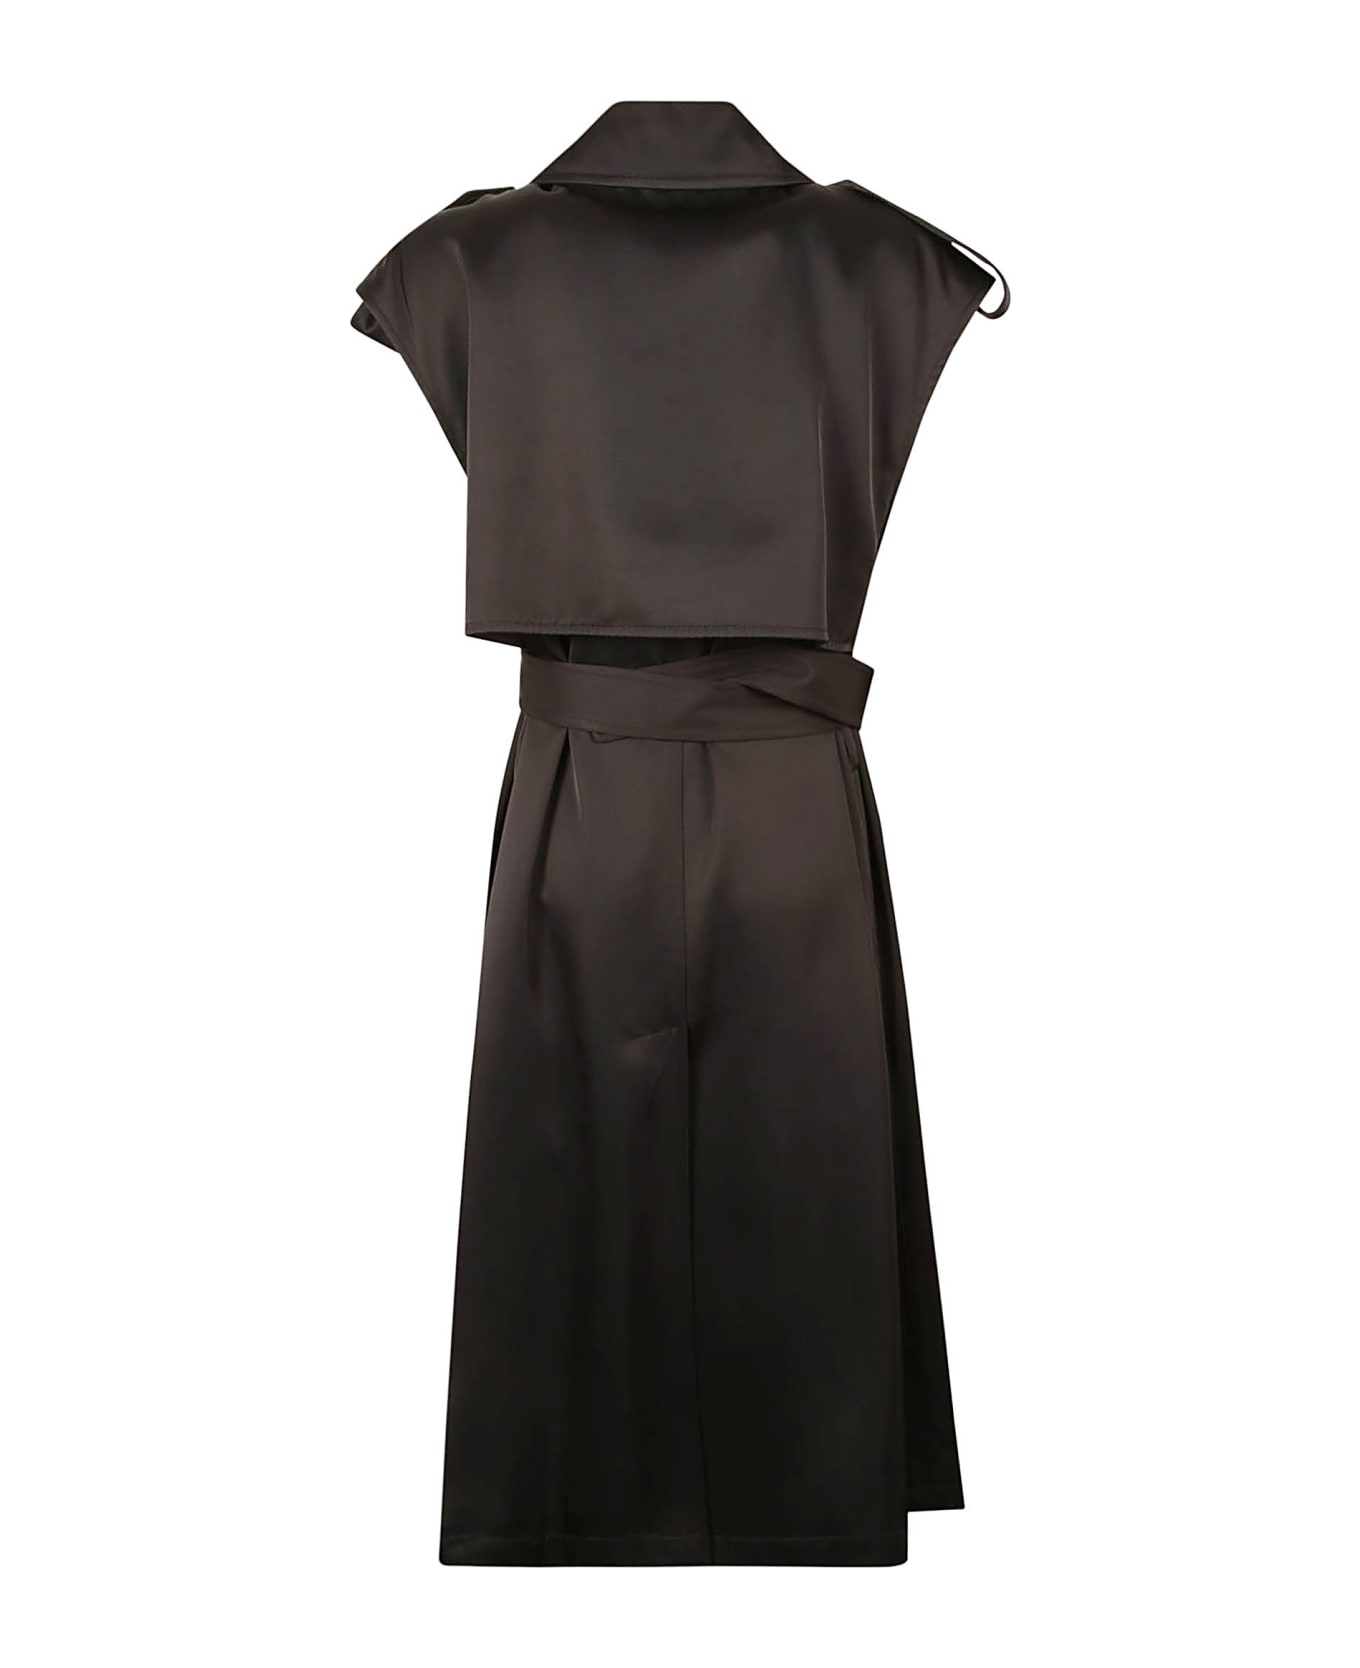 Jil Sander Sleeveless Belted Dress - Black